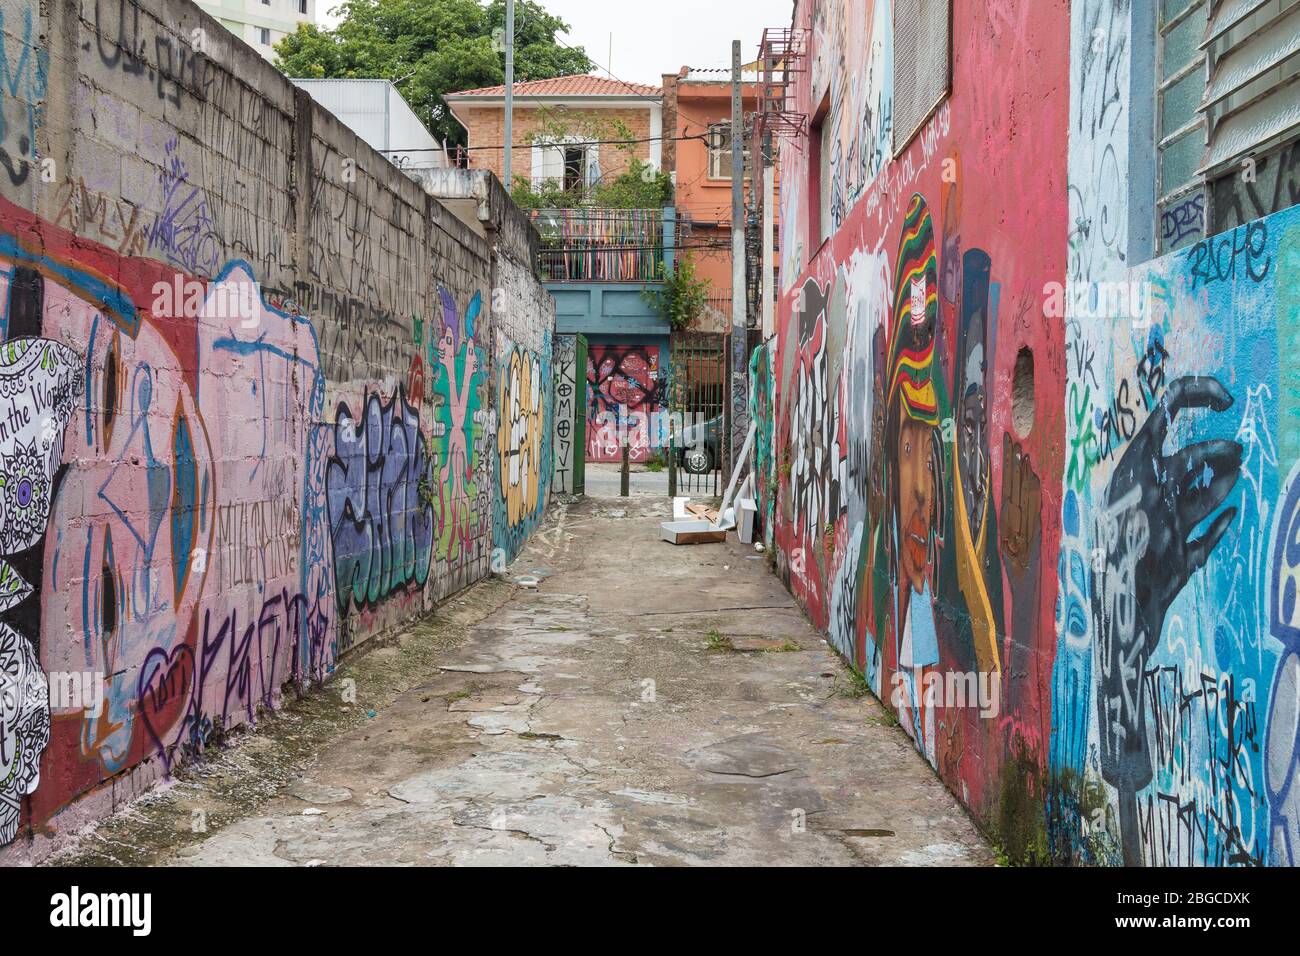 Street art and graffiti in the alleys around the Vila Madalena area of Sao Paulo, Brazil, a popular tourist attraction Stock Photo